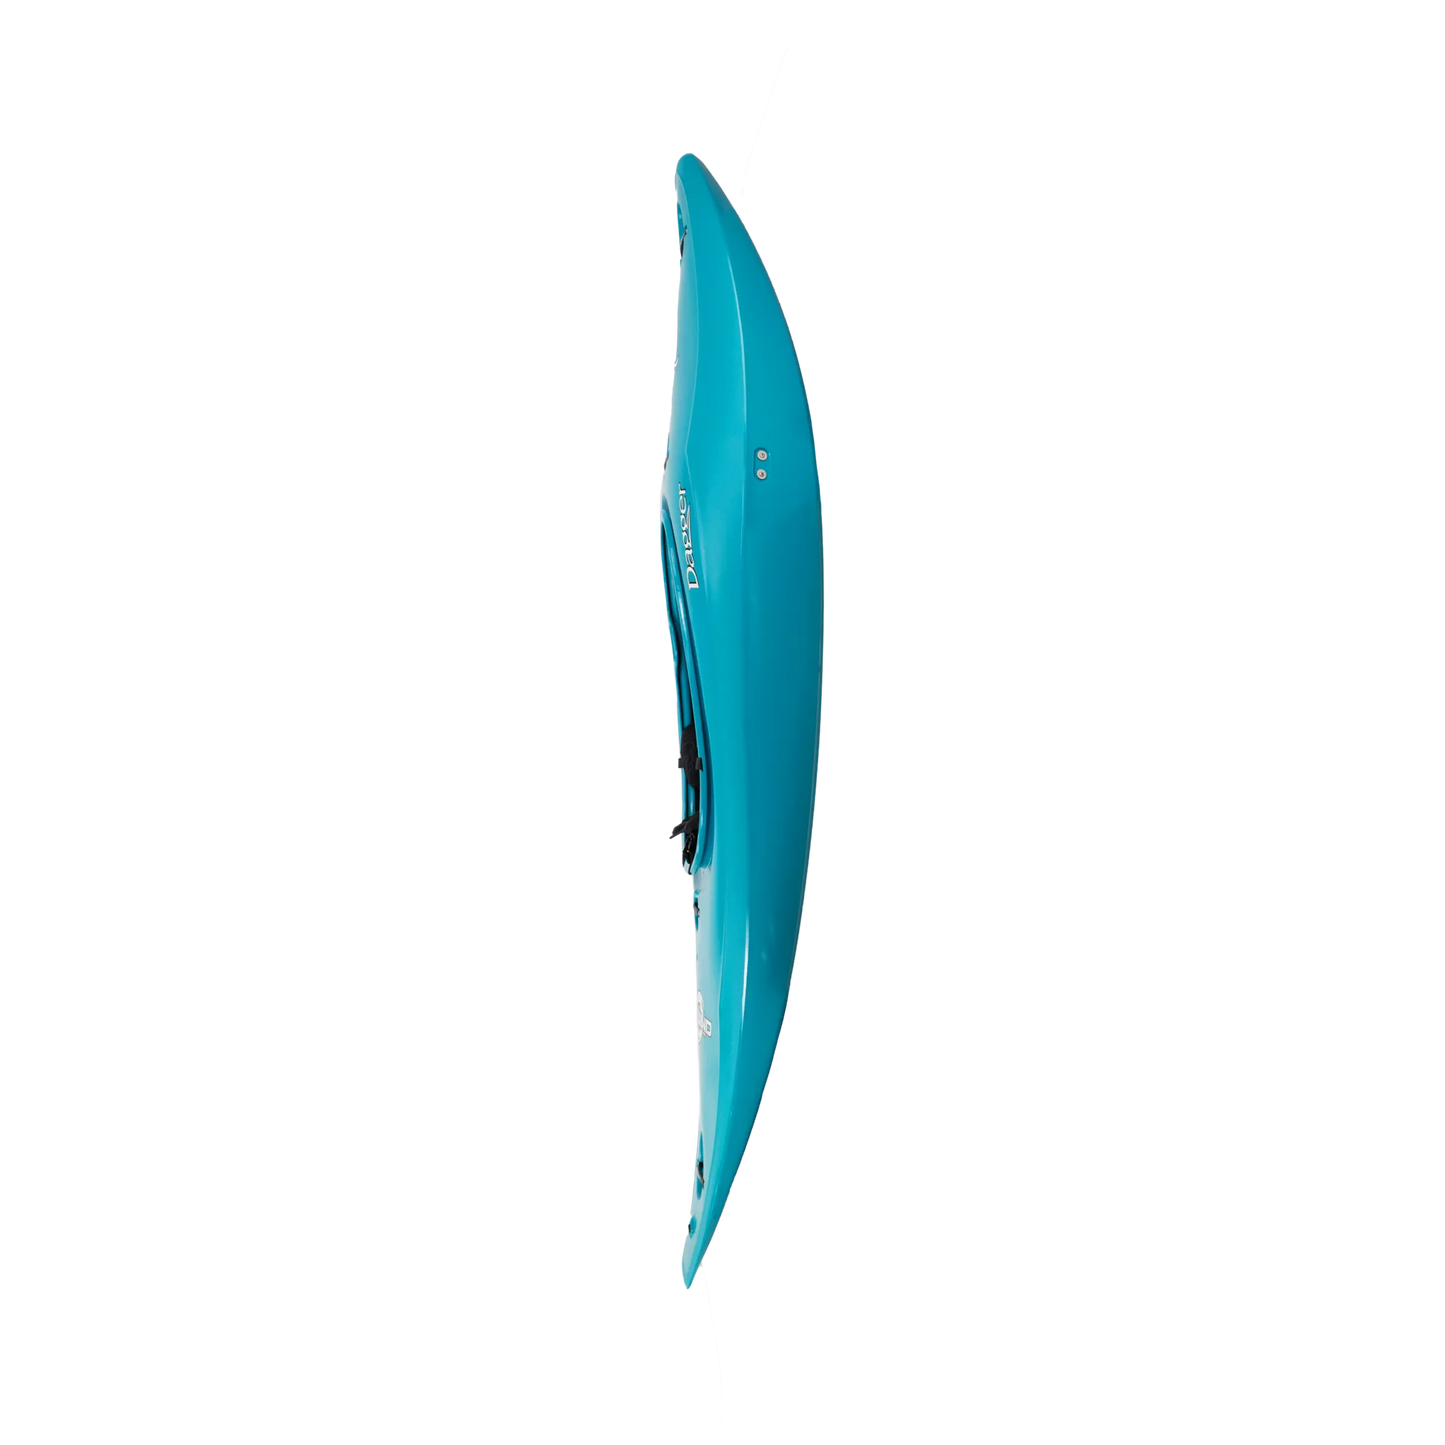 Turquoise Dagger Rewind whitewater kayak.